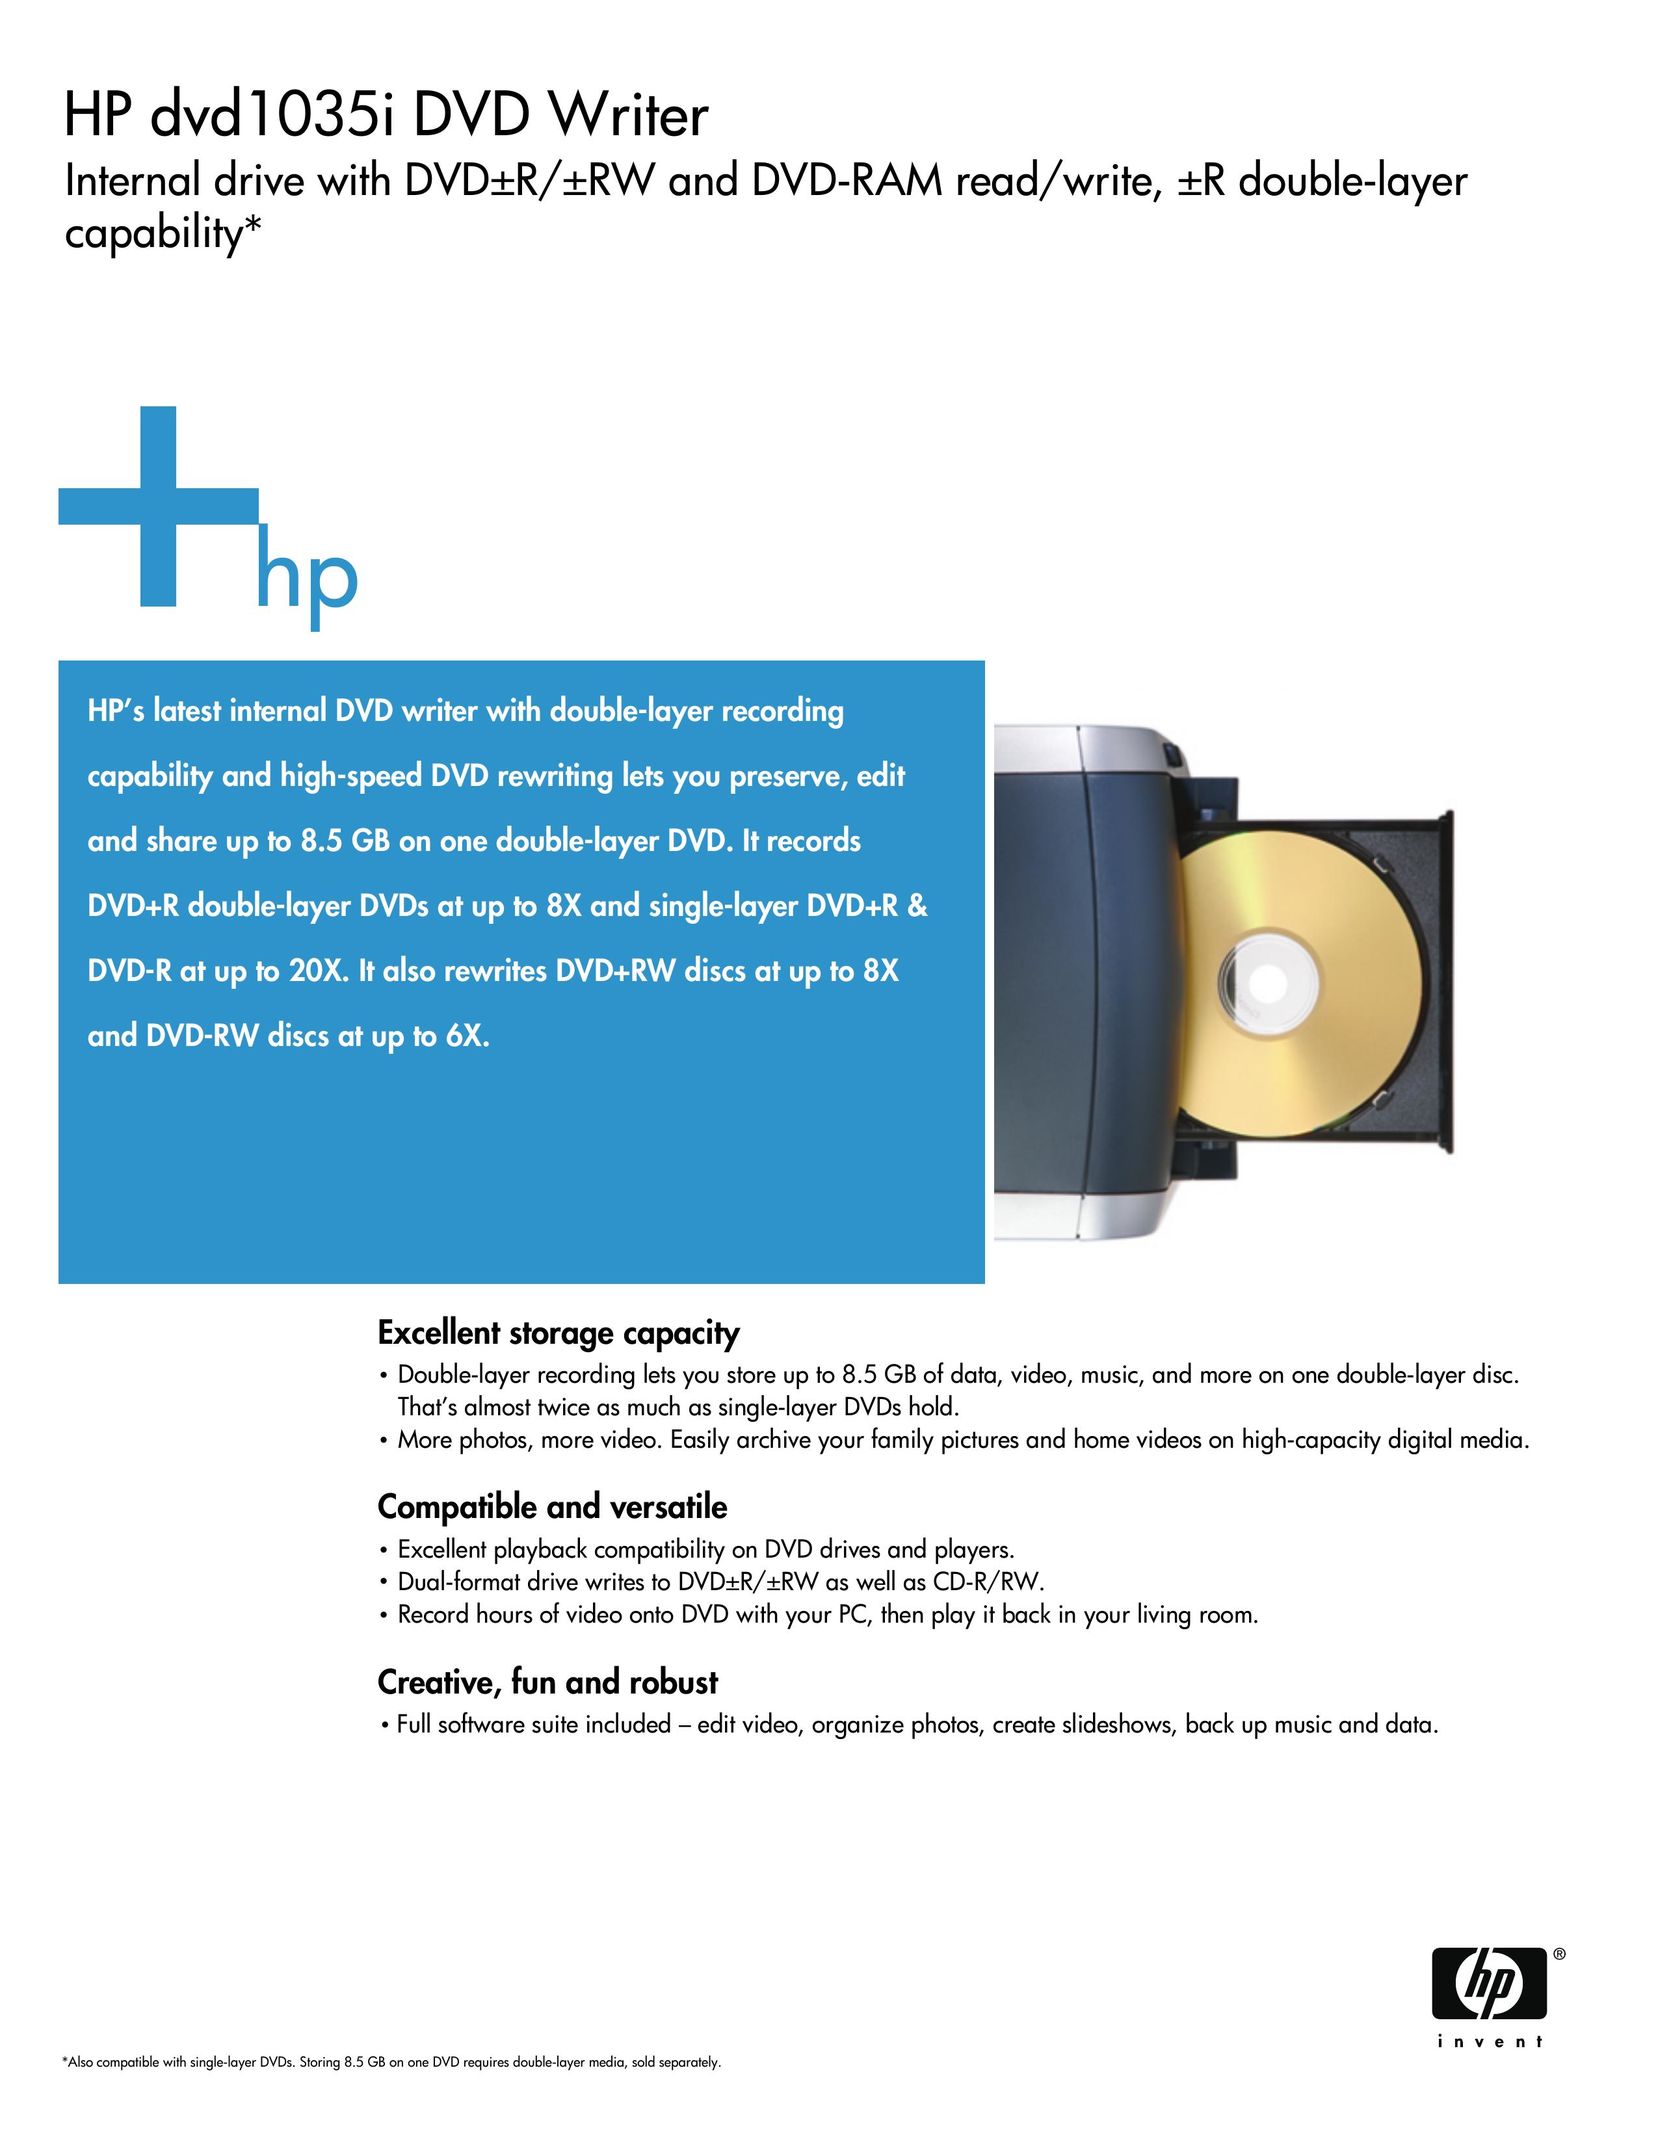 HP (Hewlett-Packard) 1035I DVD Recorder User Manual